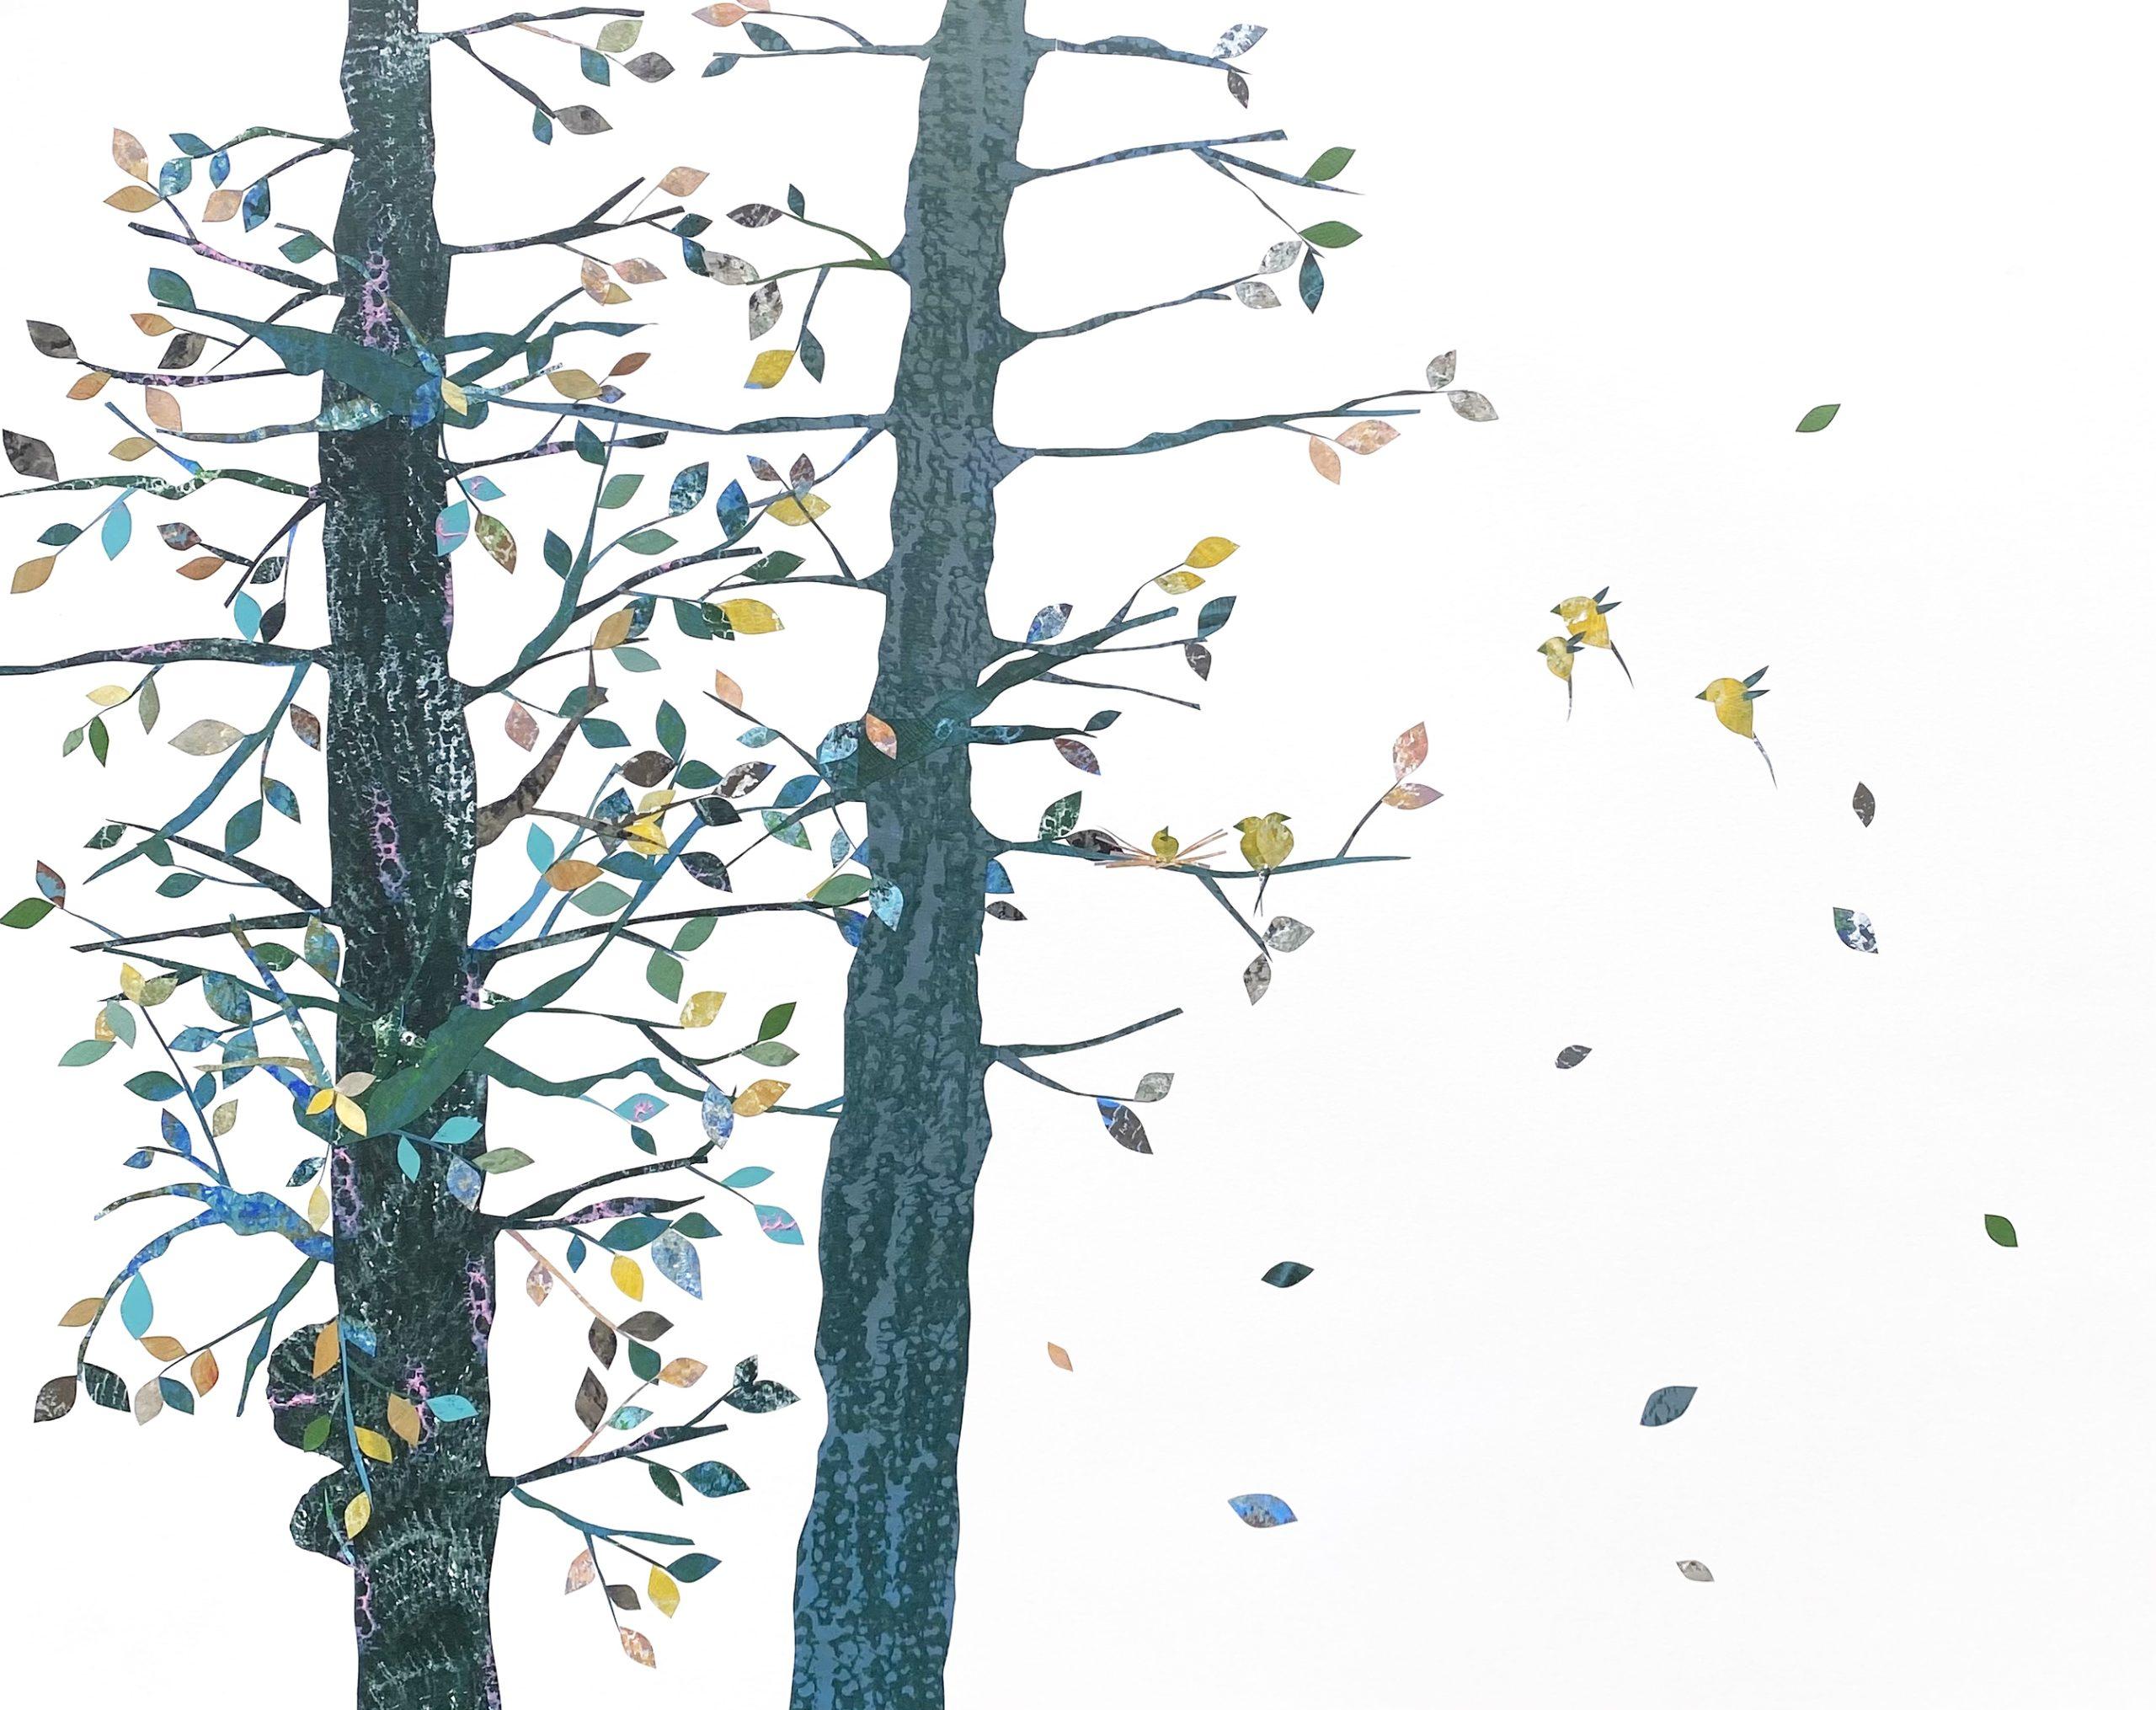 Figurative Painting Aster da Fonseca - Fledglings (Collage, Oiseaux, Paysage, arbres, Sarcelle, Bleu, Vert)